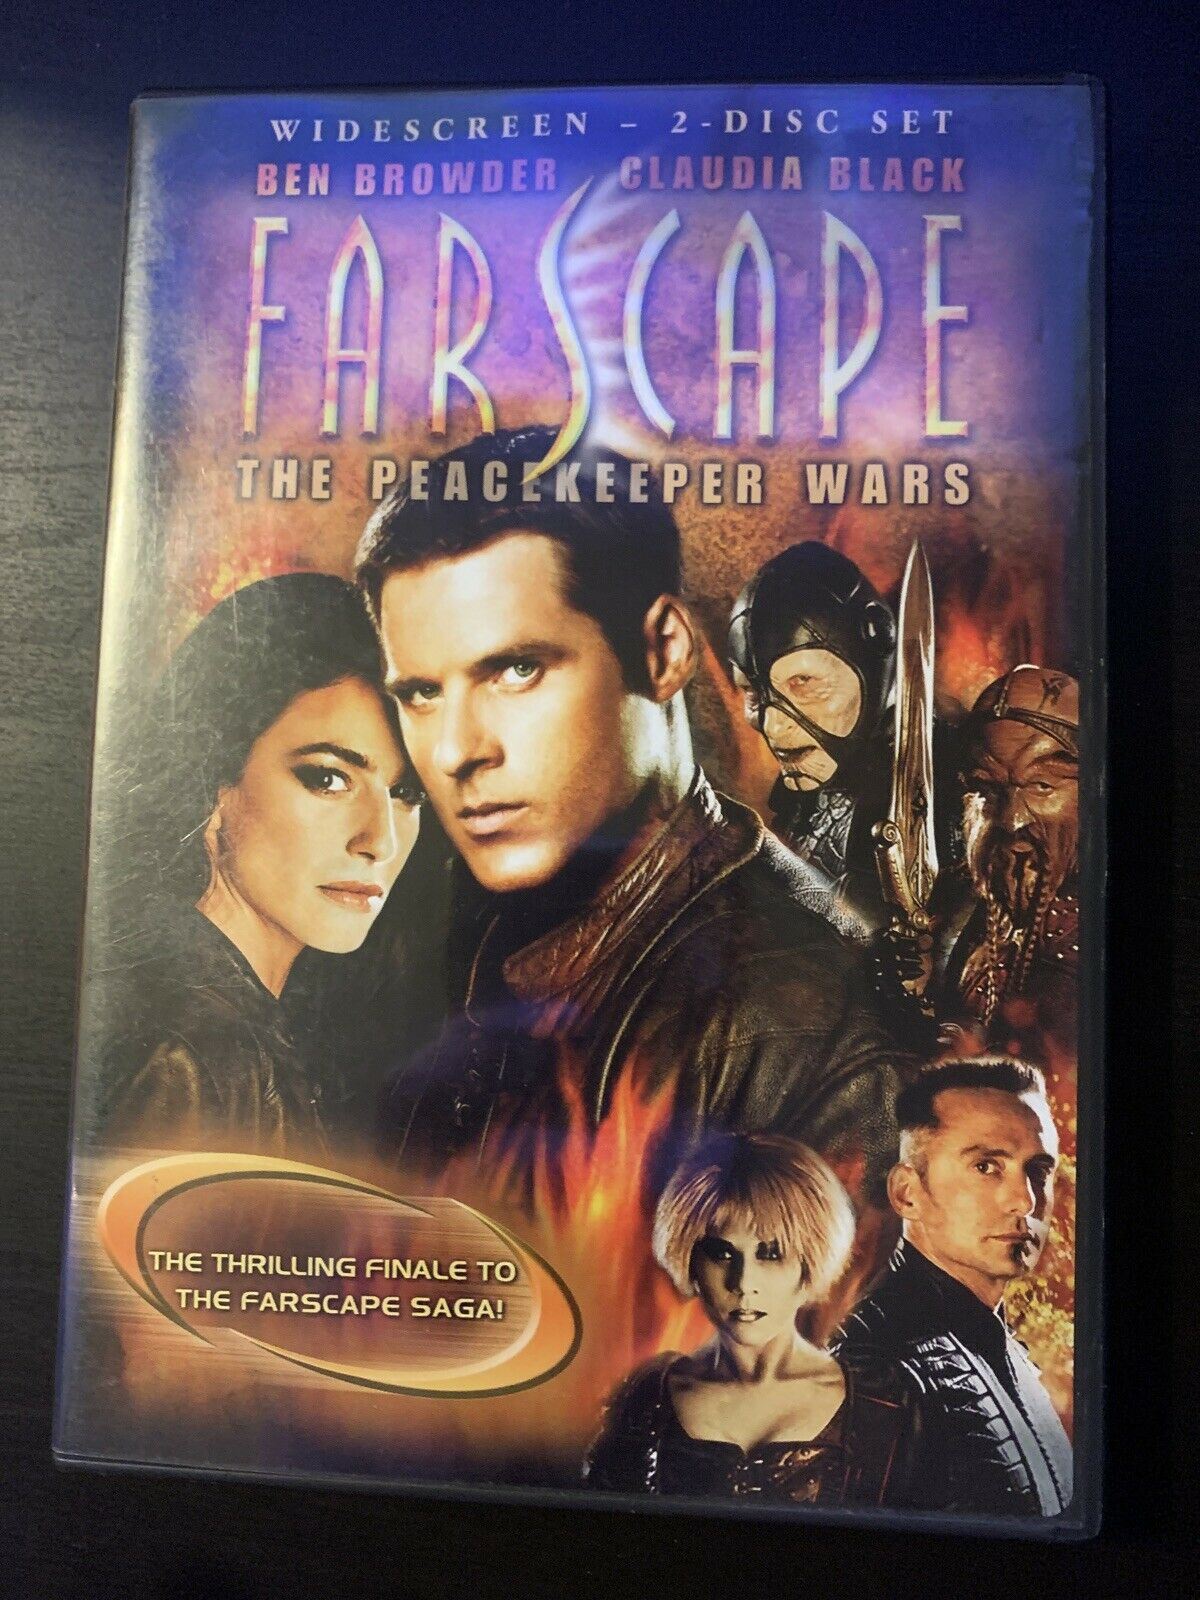 Farscape - The Peacekeeper Wars (DVD, 2004) Ben Browder, Claudia Black. Region 1